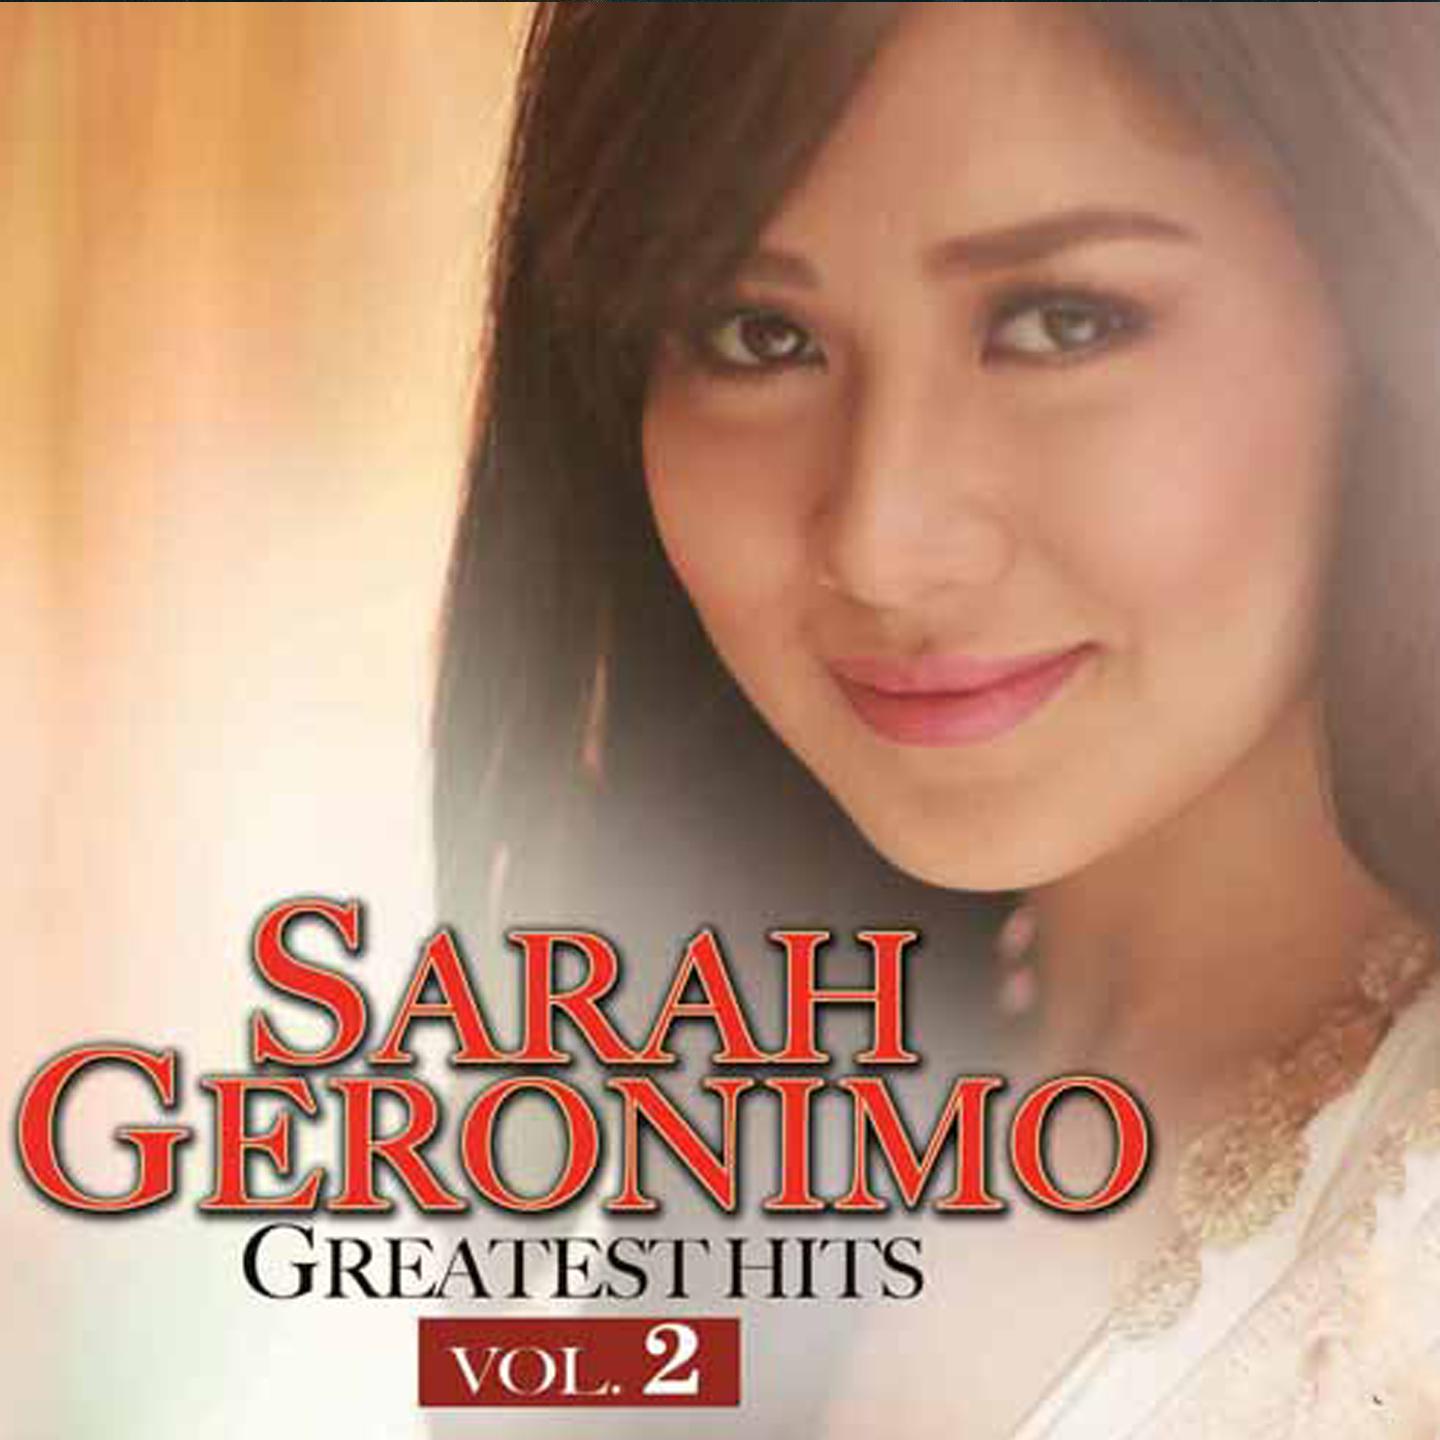 Sarah Geronimo Greatest Hits, Vol. 2